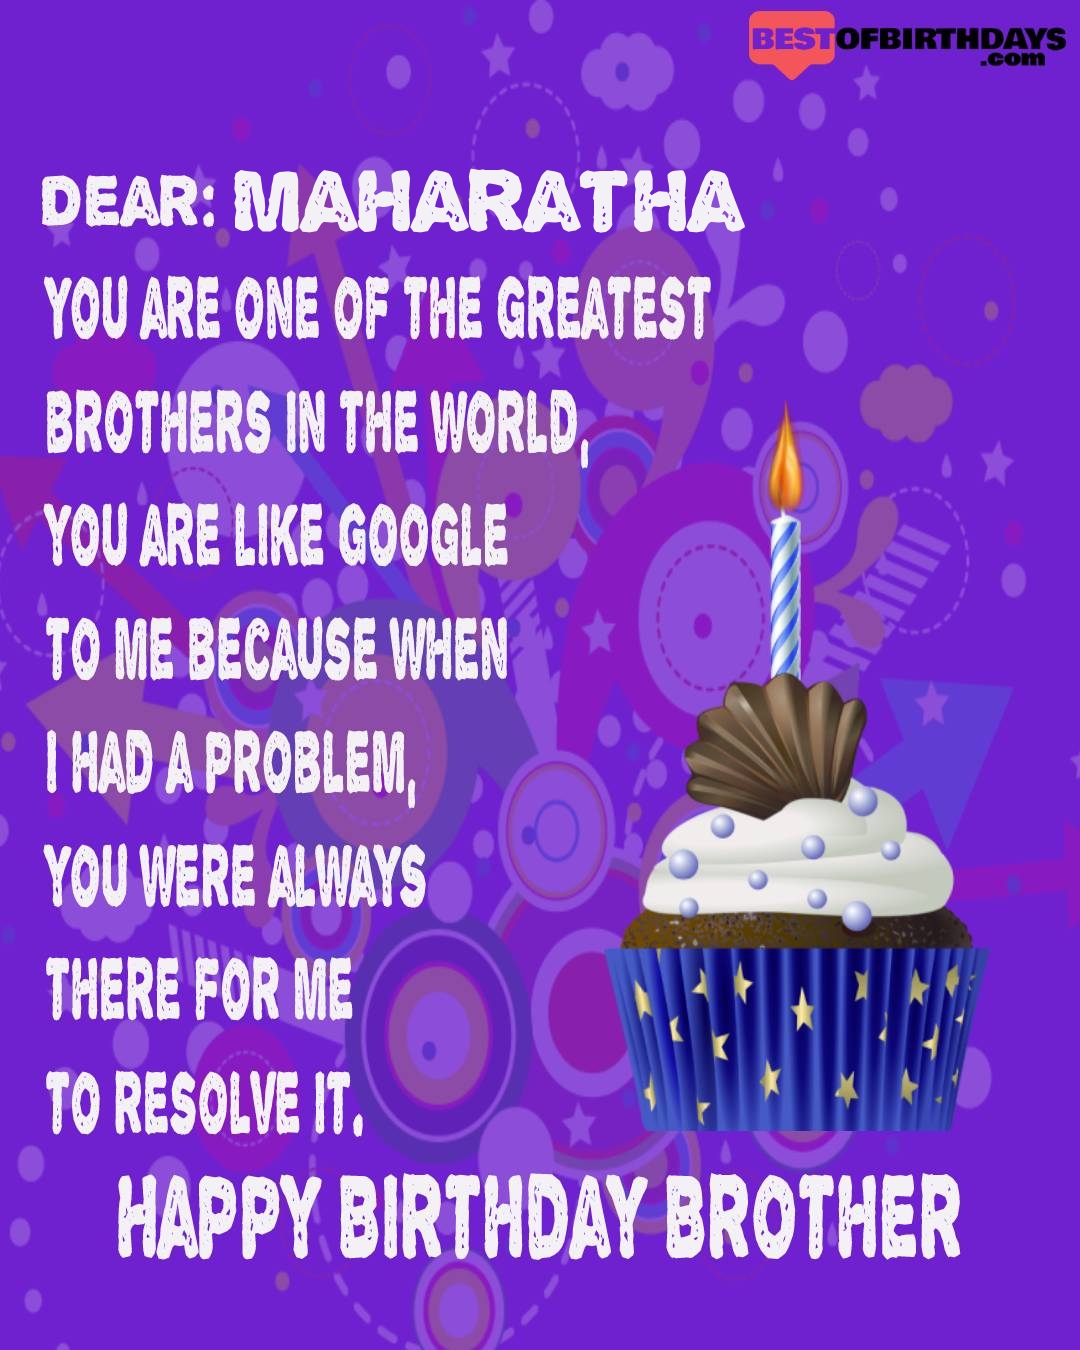 Happy birthday maharatha bhai brother bro